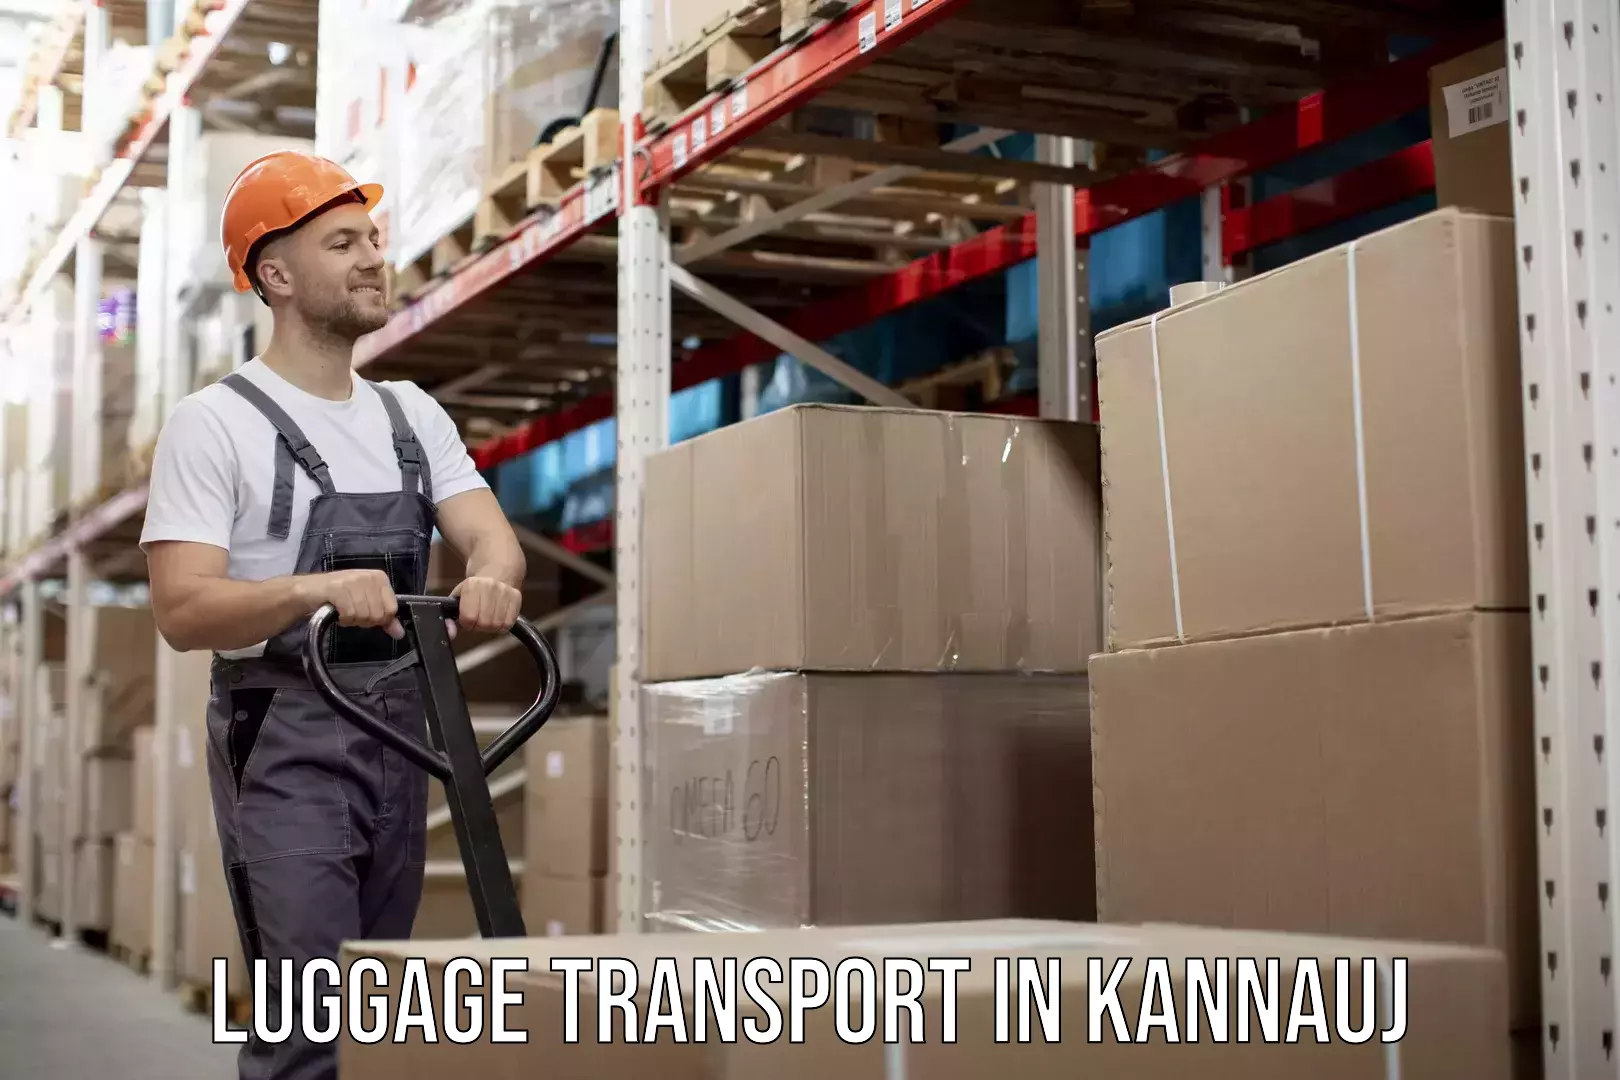 Luggage transport solutions in Kannauj